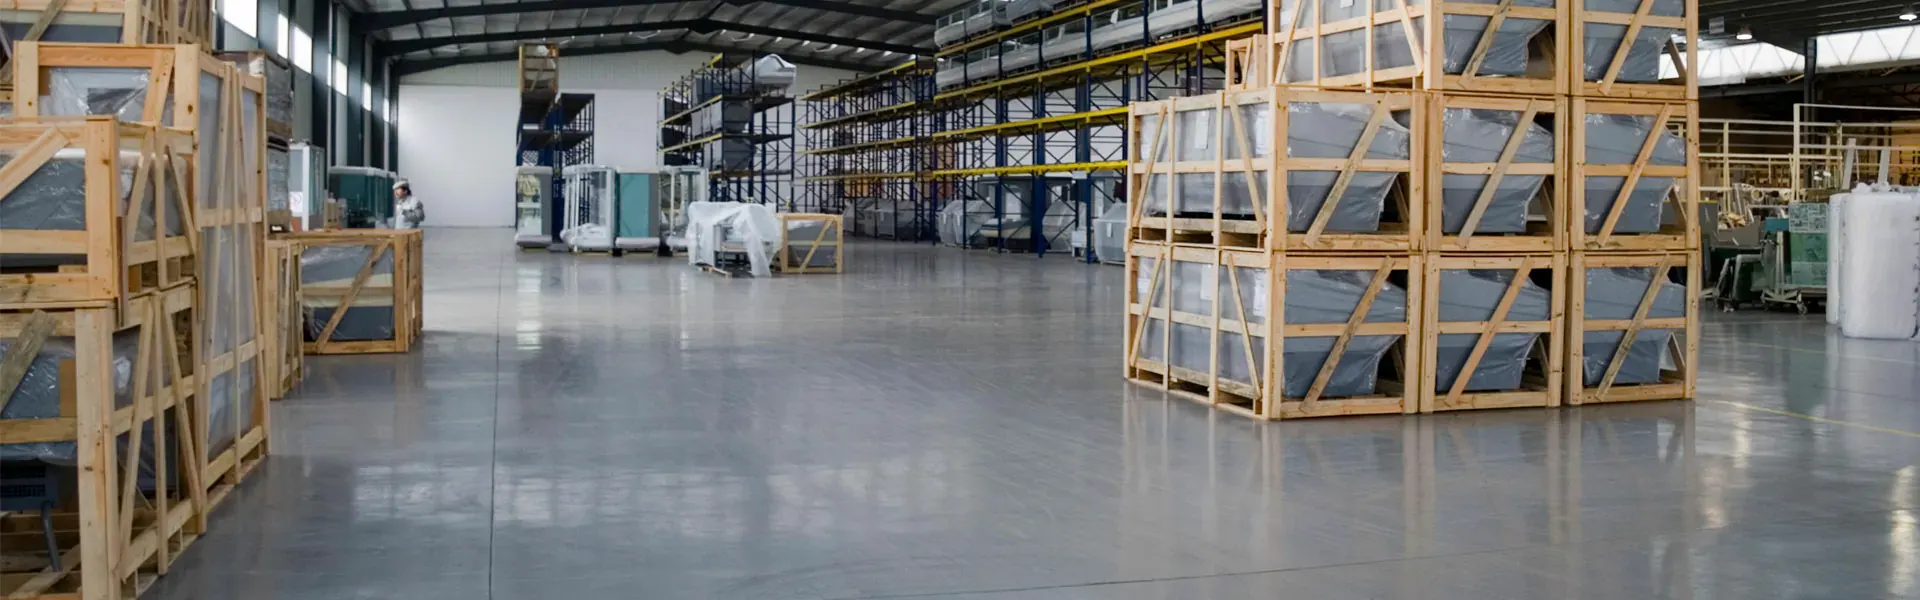 Epoxy Flooring Perth warehouse